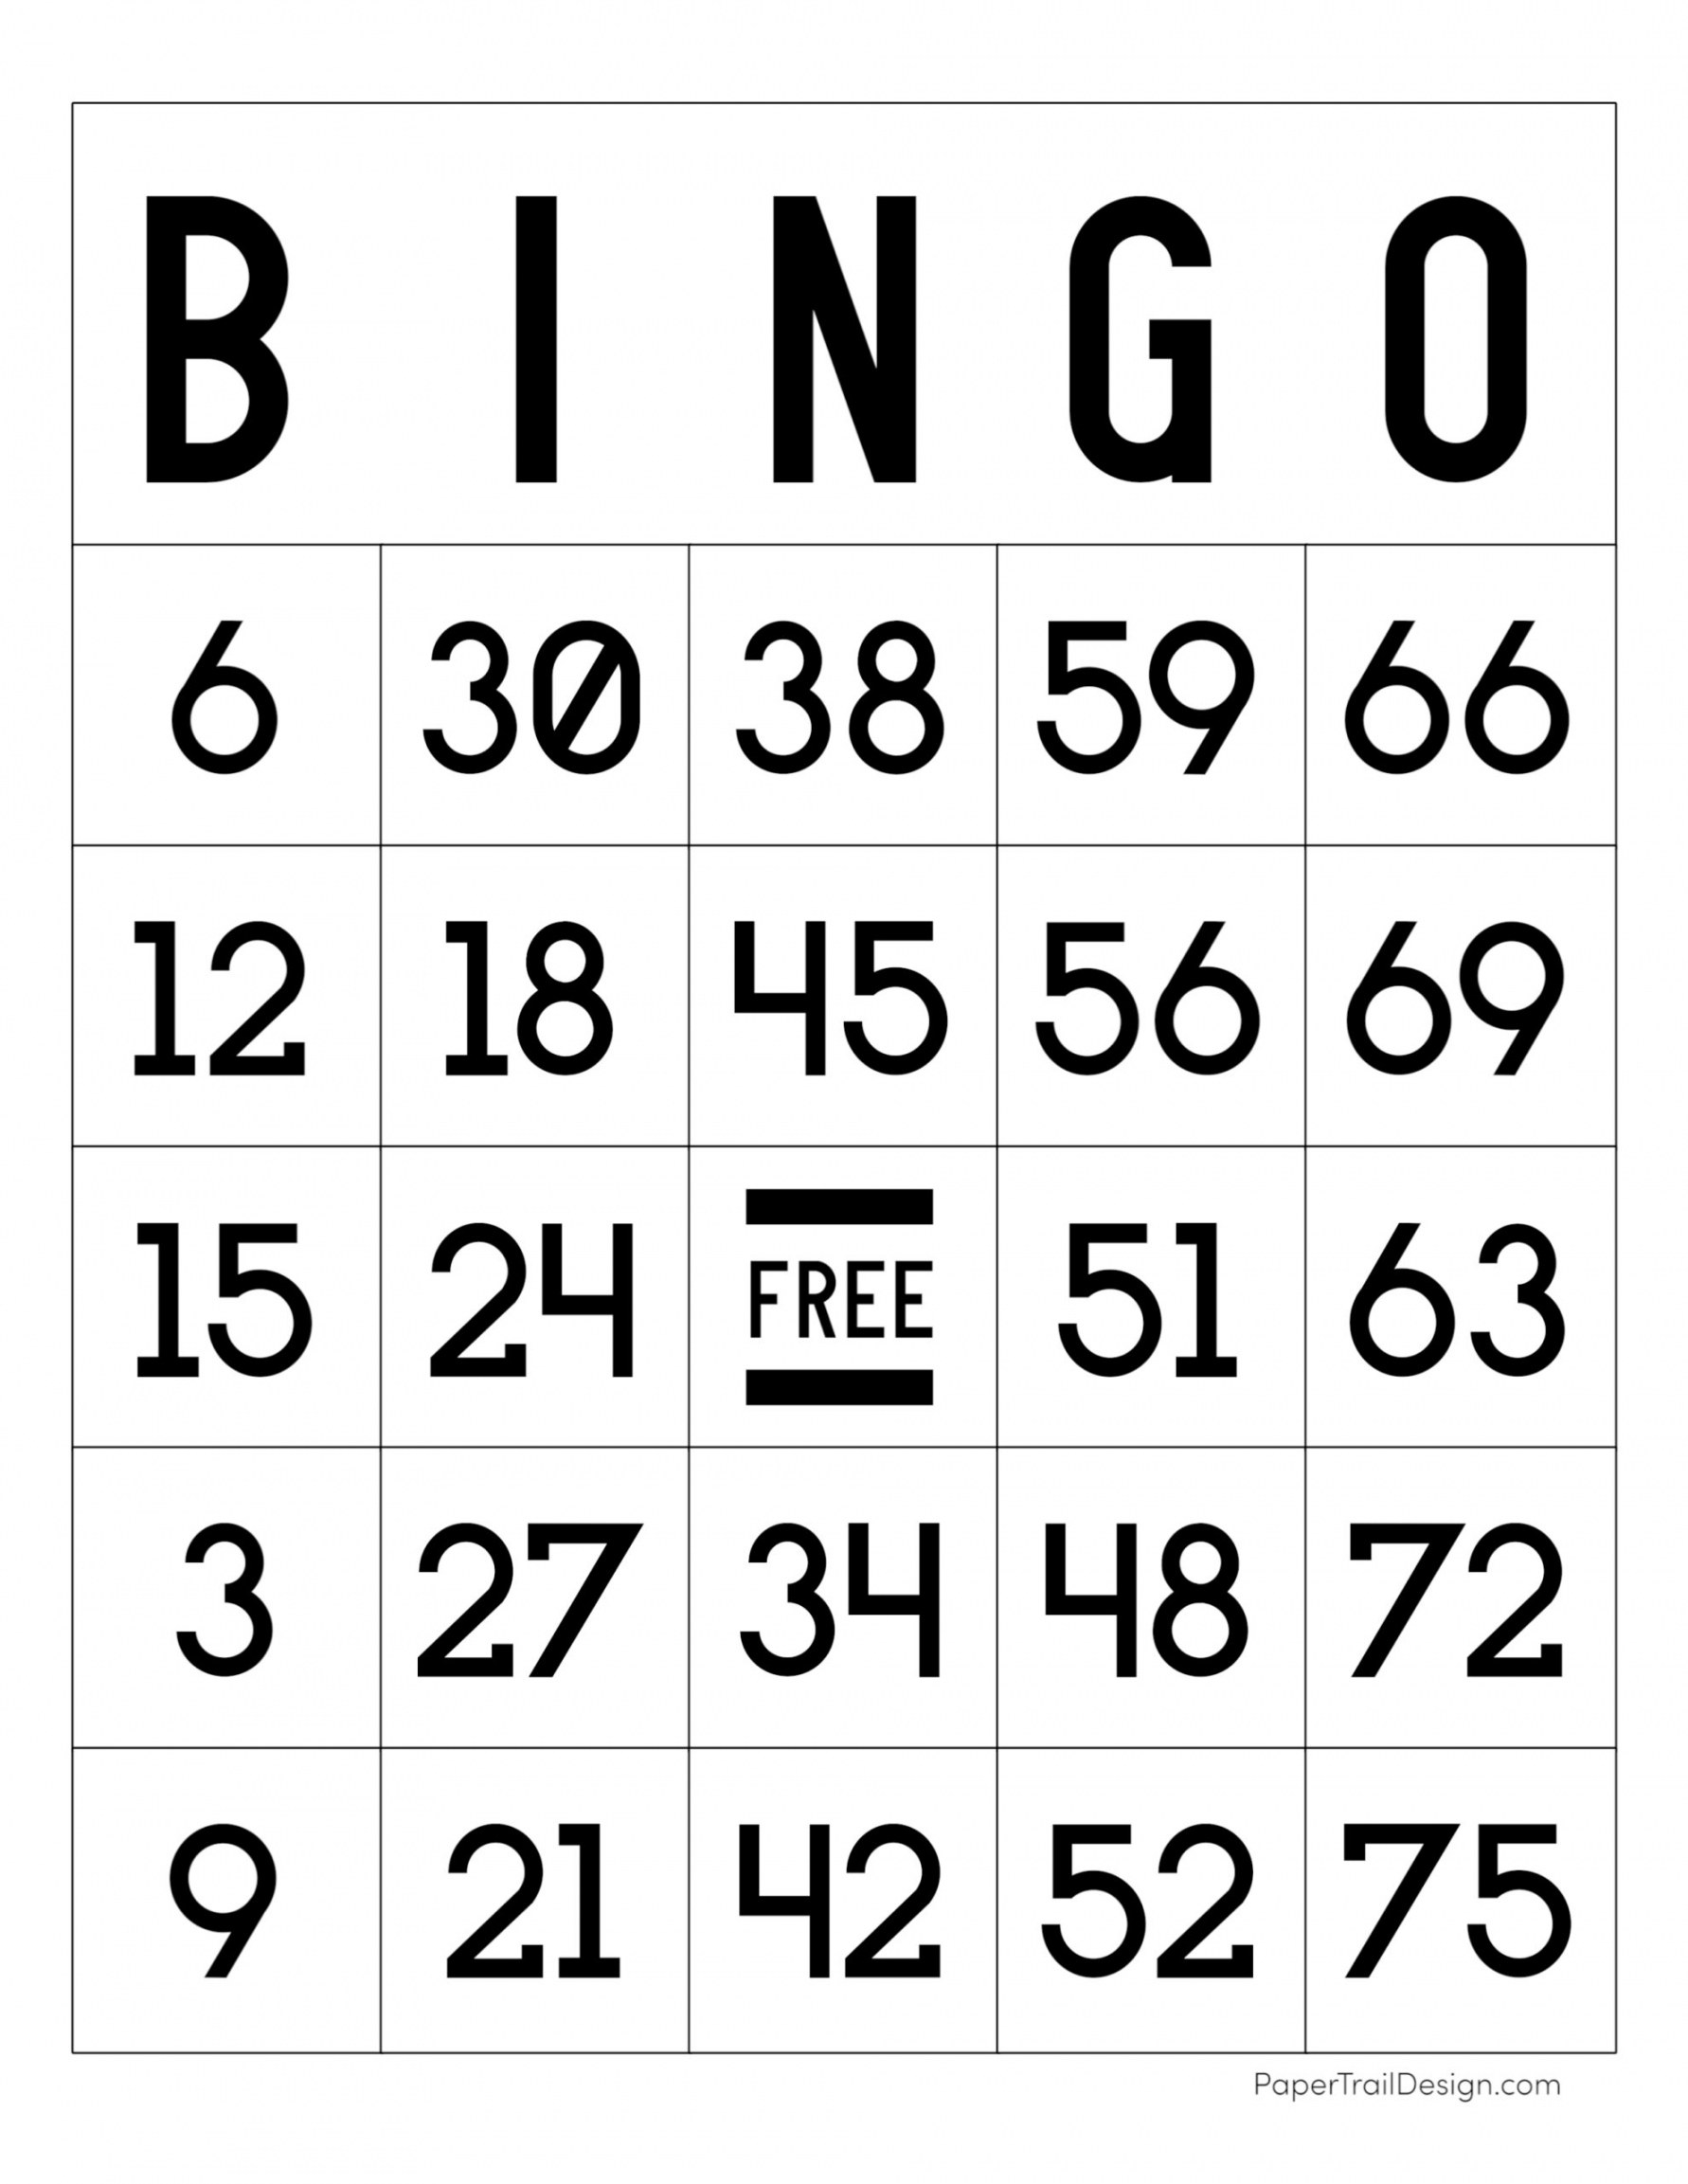 Free Printable Bingo Cards - Paper Trail Design - FREE Printables - Free Printable Bingo Cards 1-75